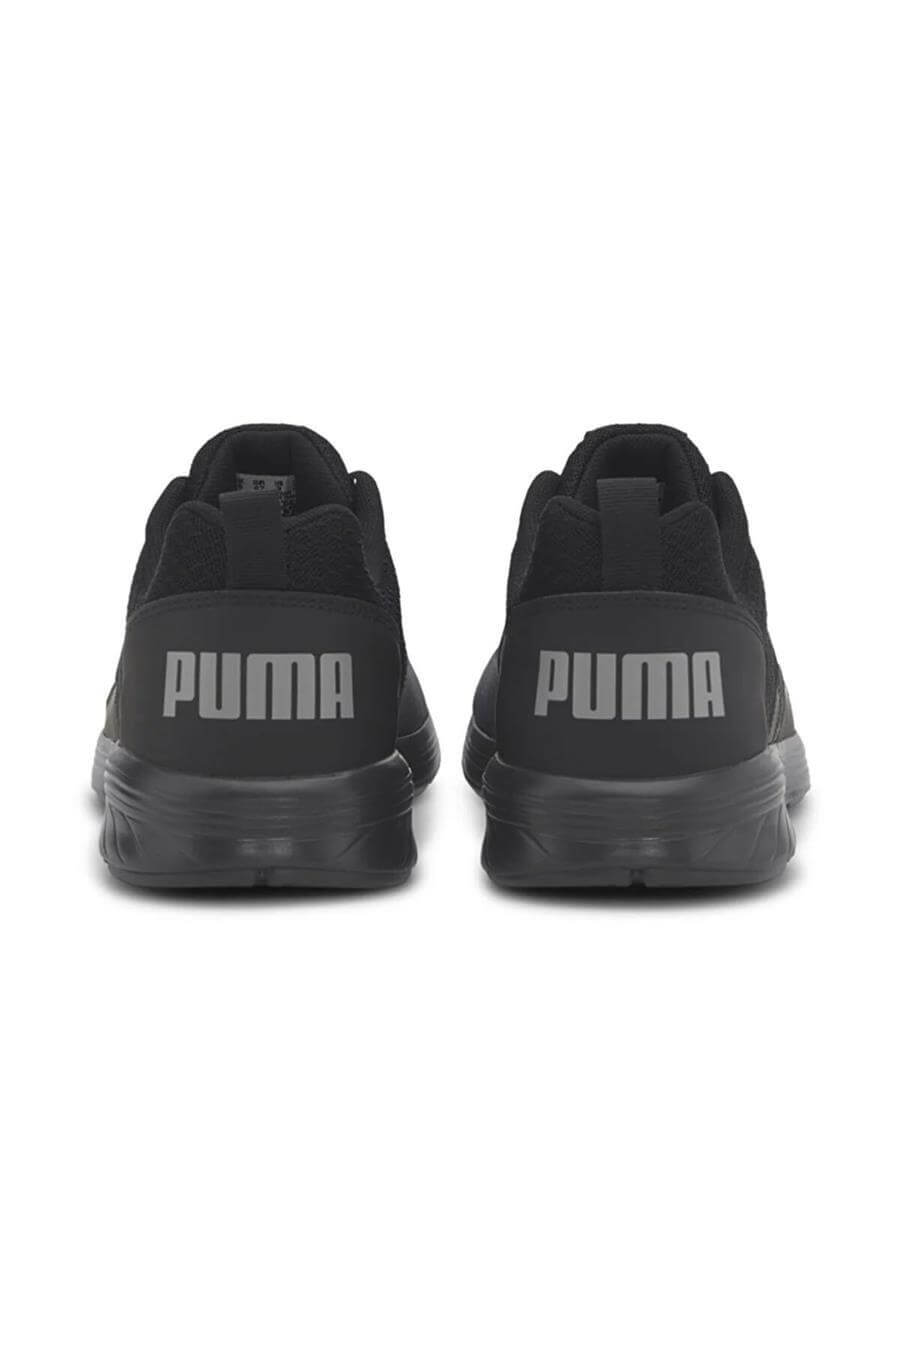 Puma 190556 38 Nrgy Comet Puma Black-Ultra Gray-Dark Sh Adow Yetişkin Erkek  Koşu Ayakkabısı